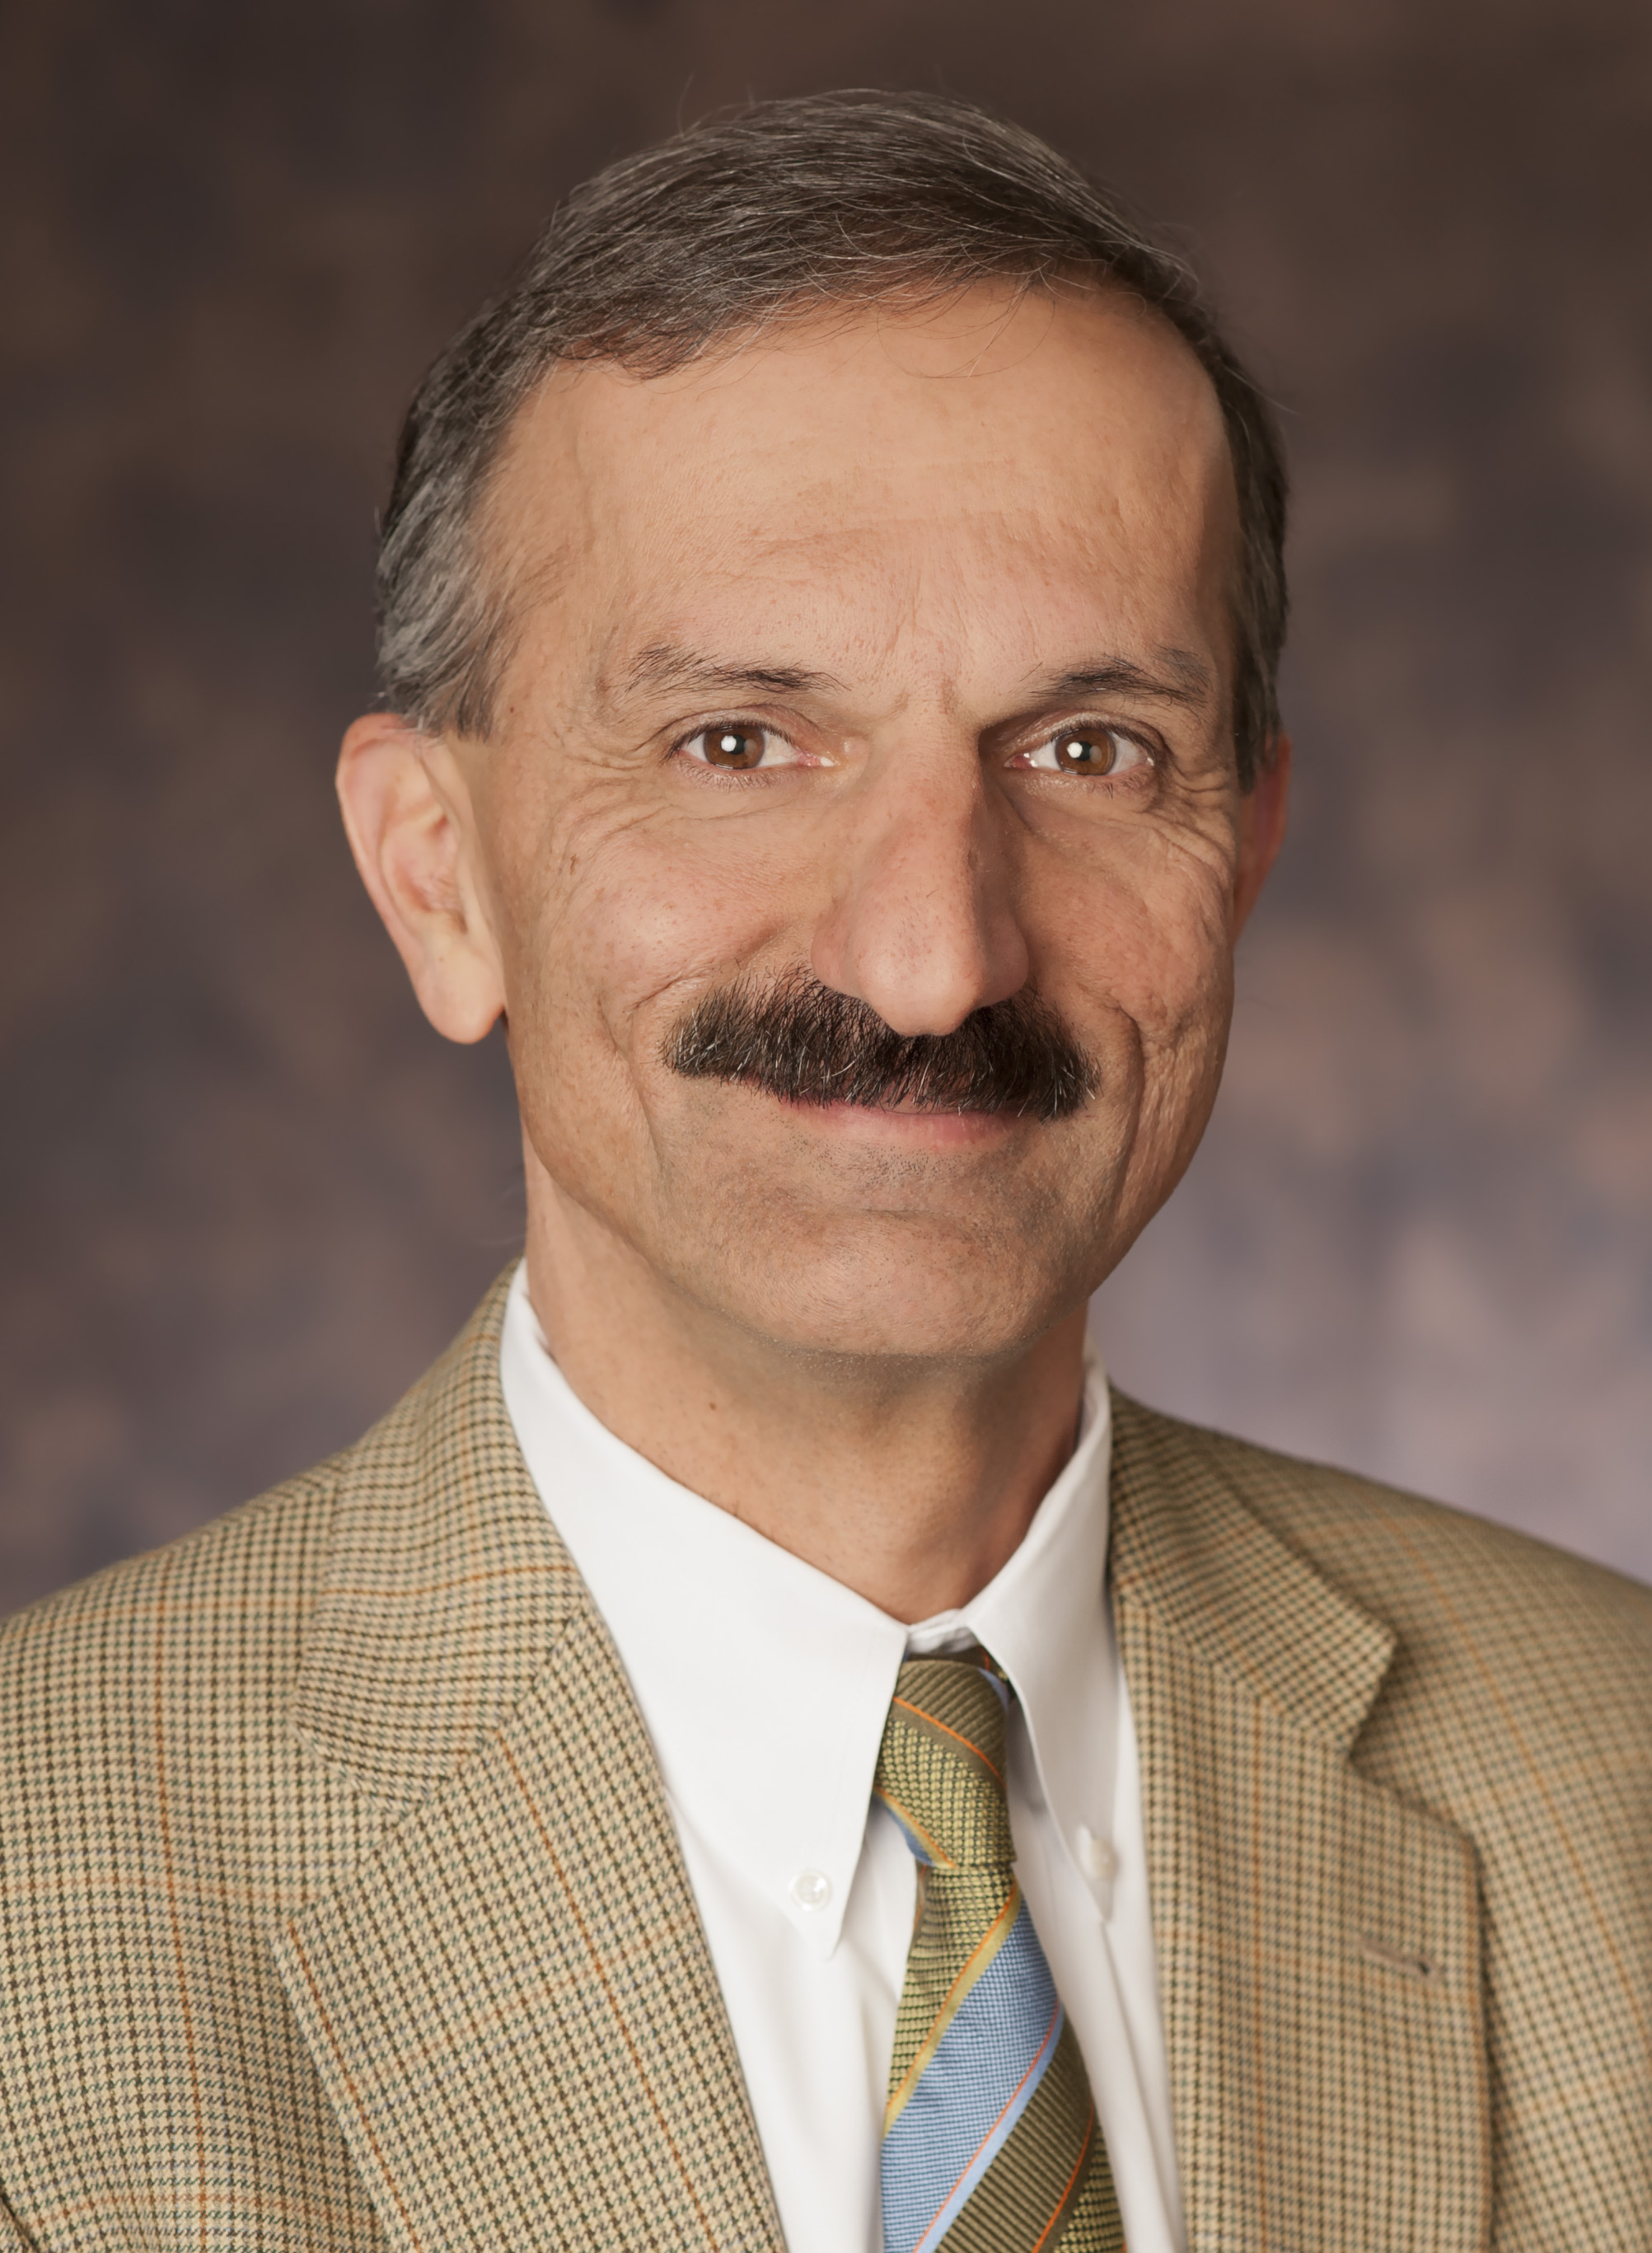 Dr. Hamid Ghandehari